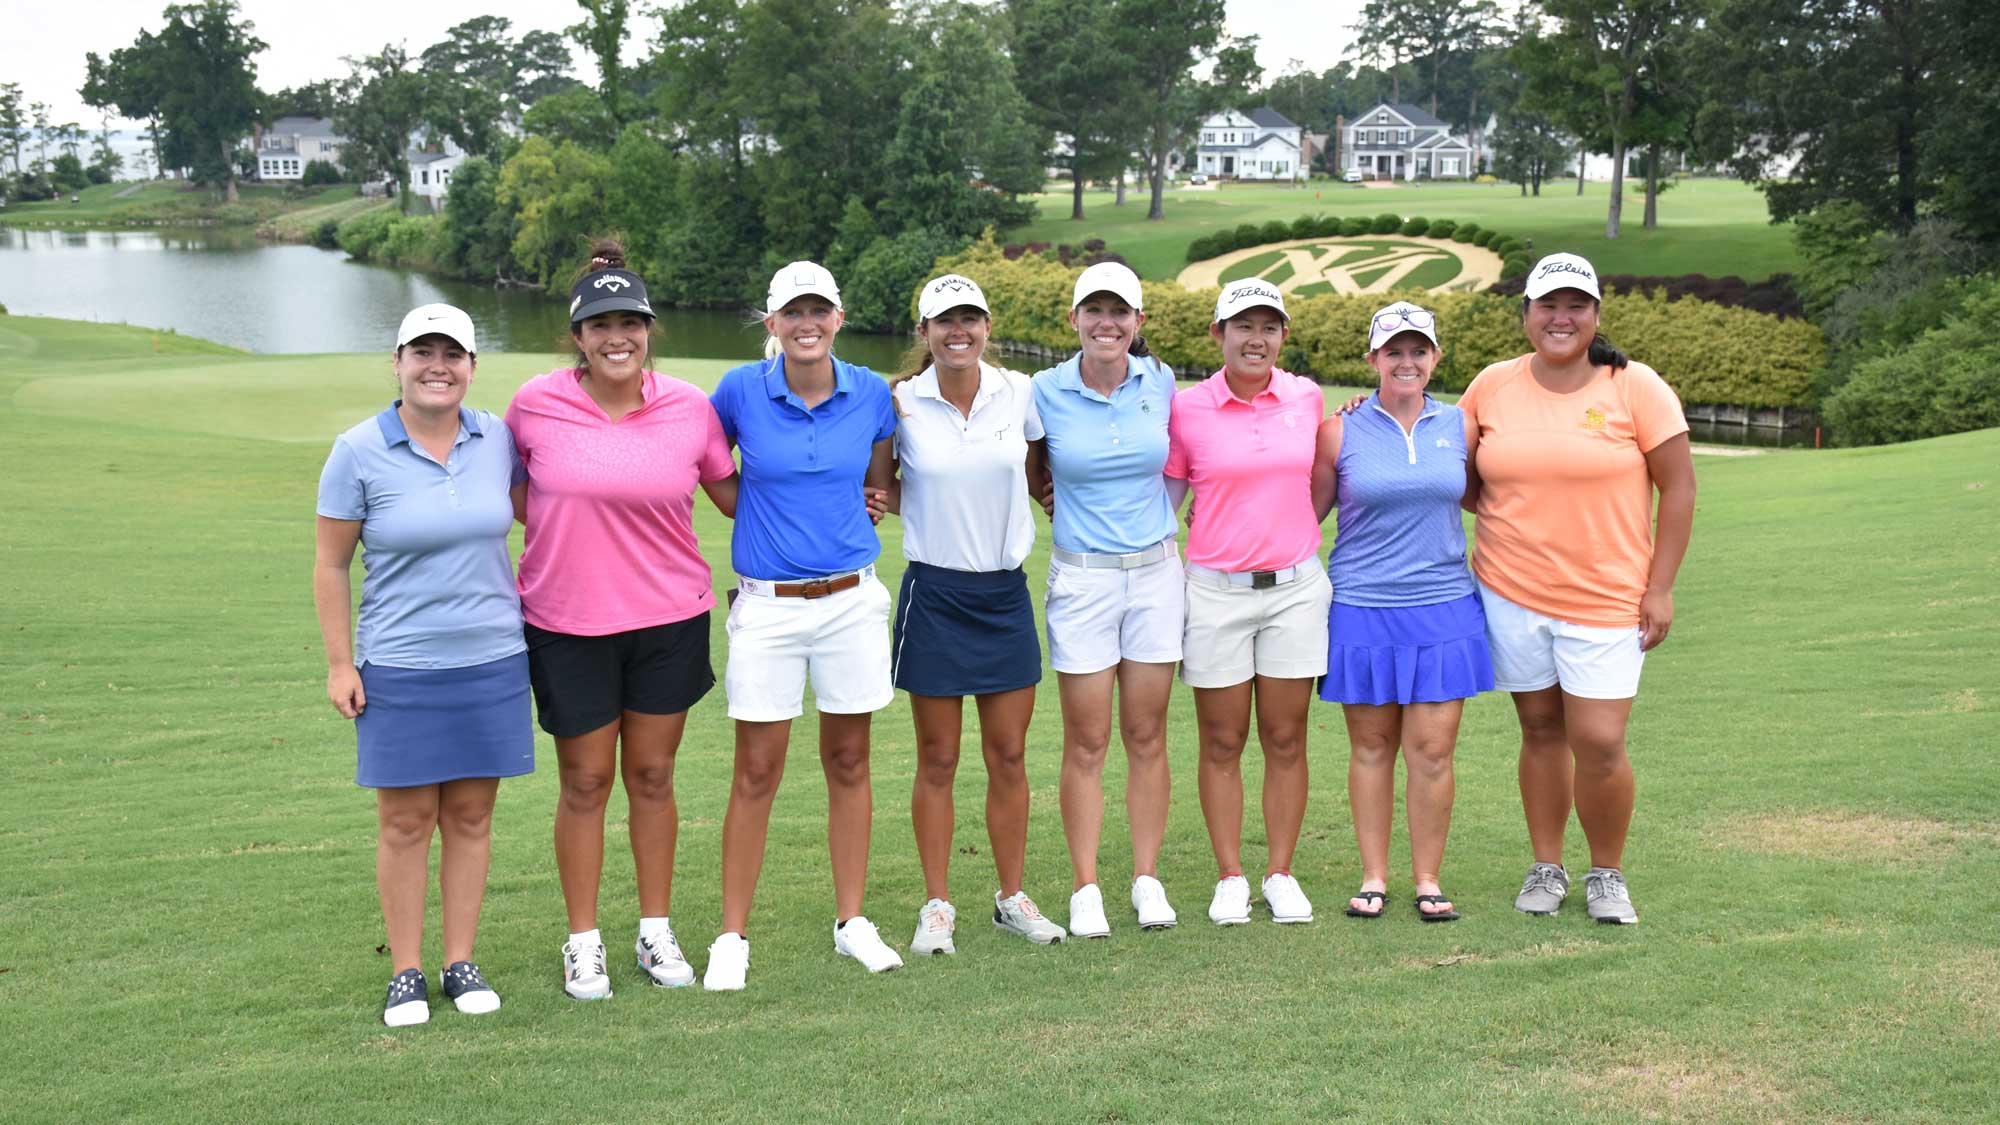 U.S. Women's Open qualifiers include some big names in golf